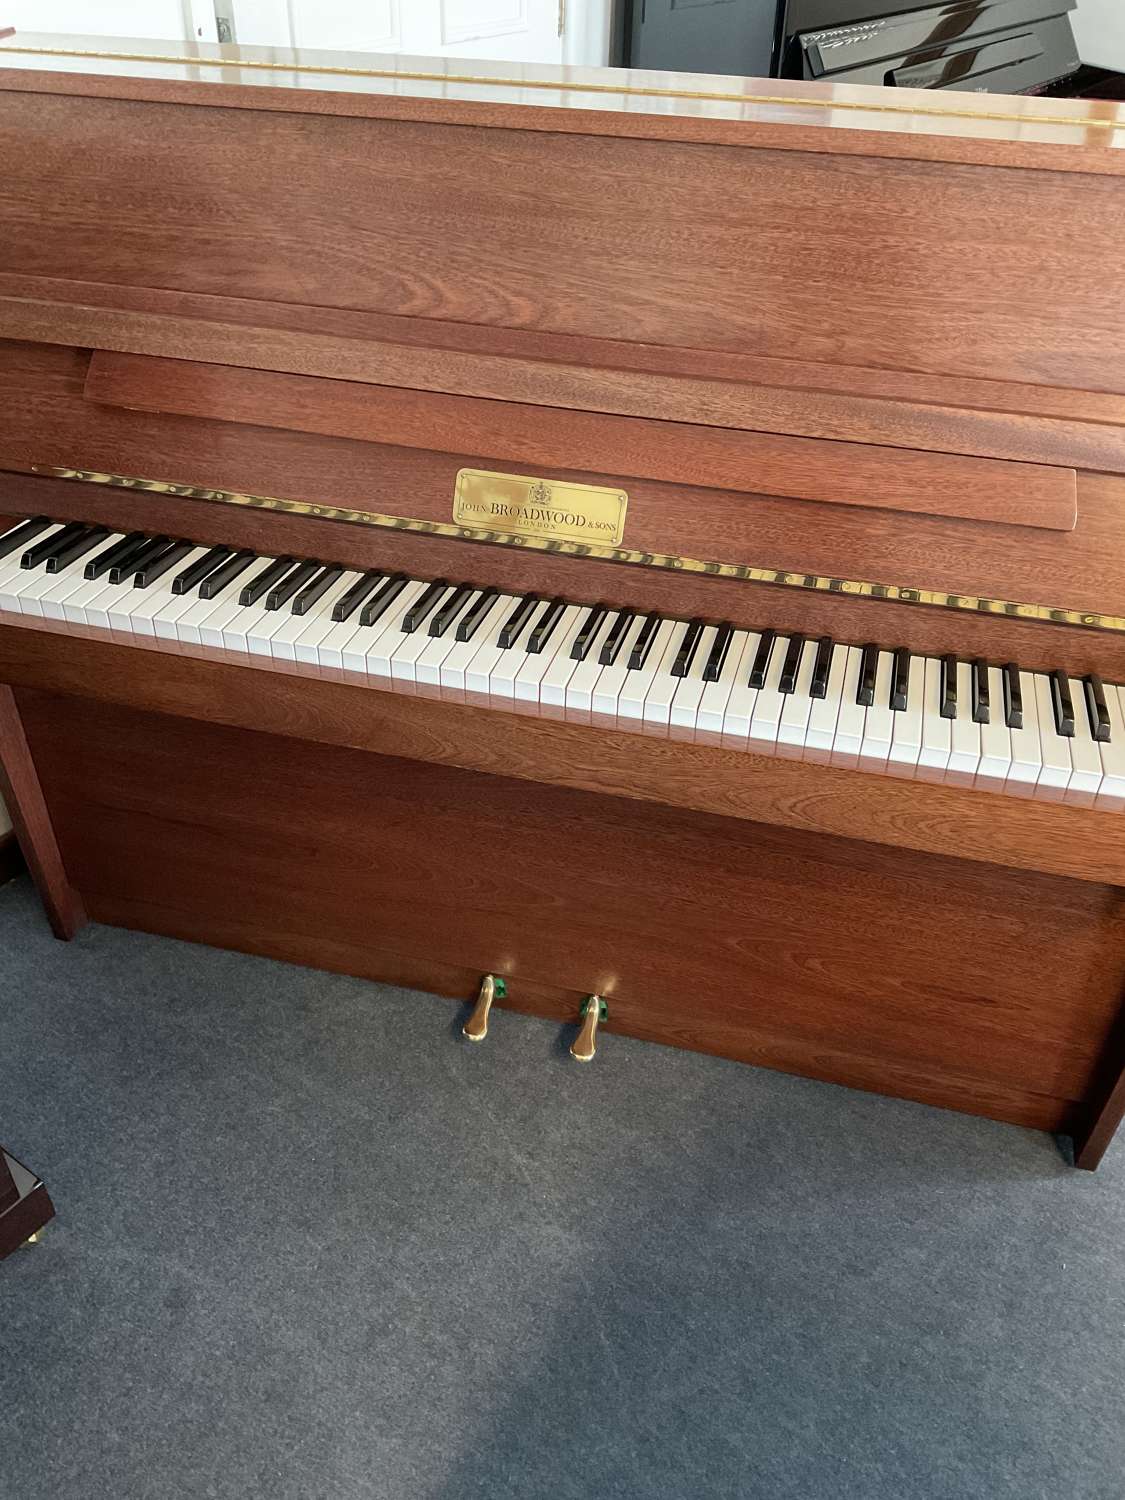 John Broadwood modern upright piano for sale